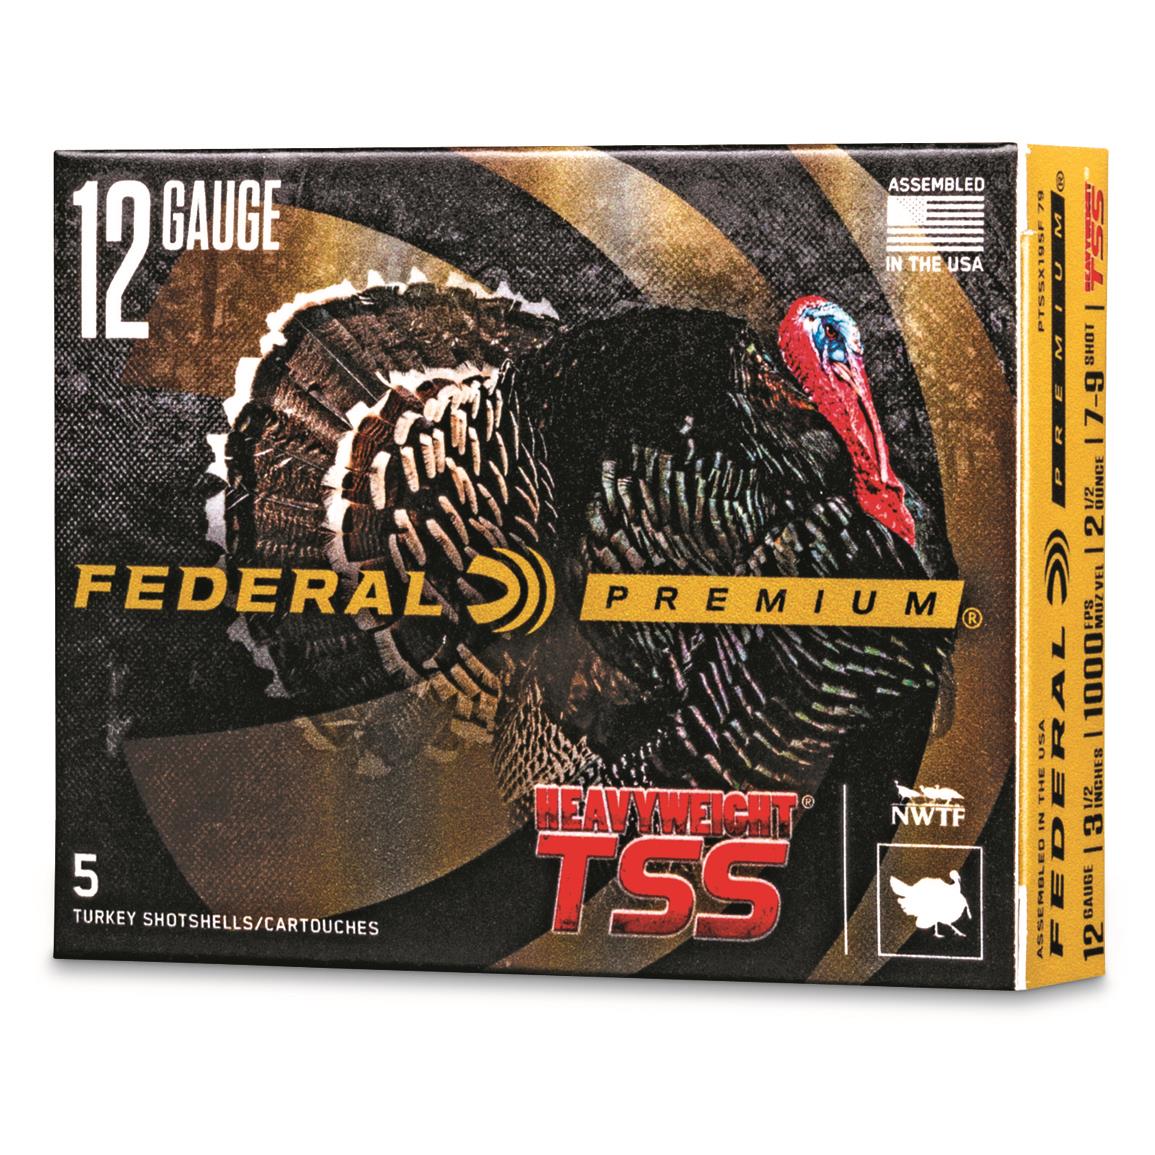 Federal Premium Heavyweight TSS, 12 Gauge, 3 1/2", 2 1/2 oz. Shotshells, 5 Rounds